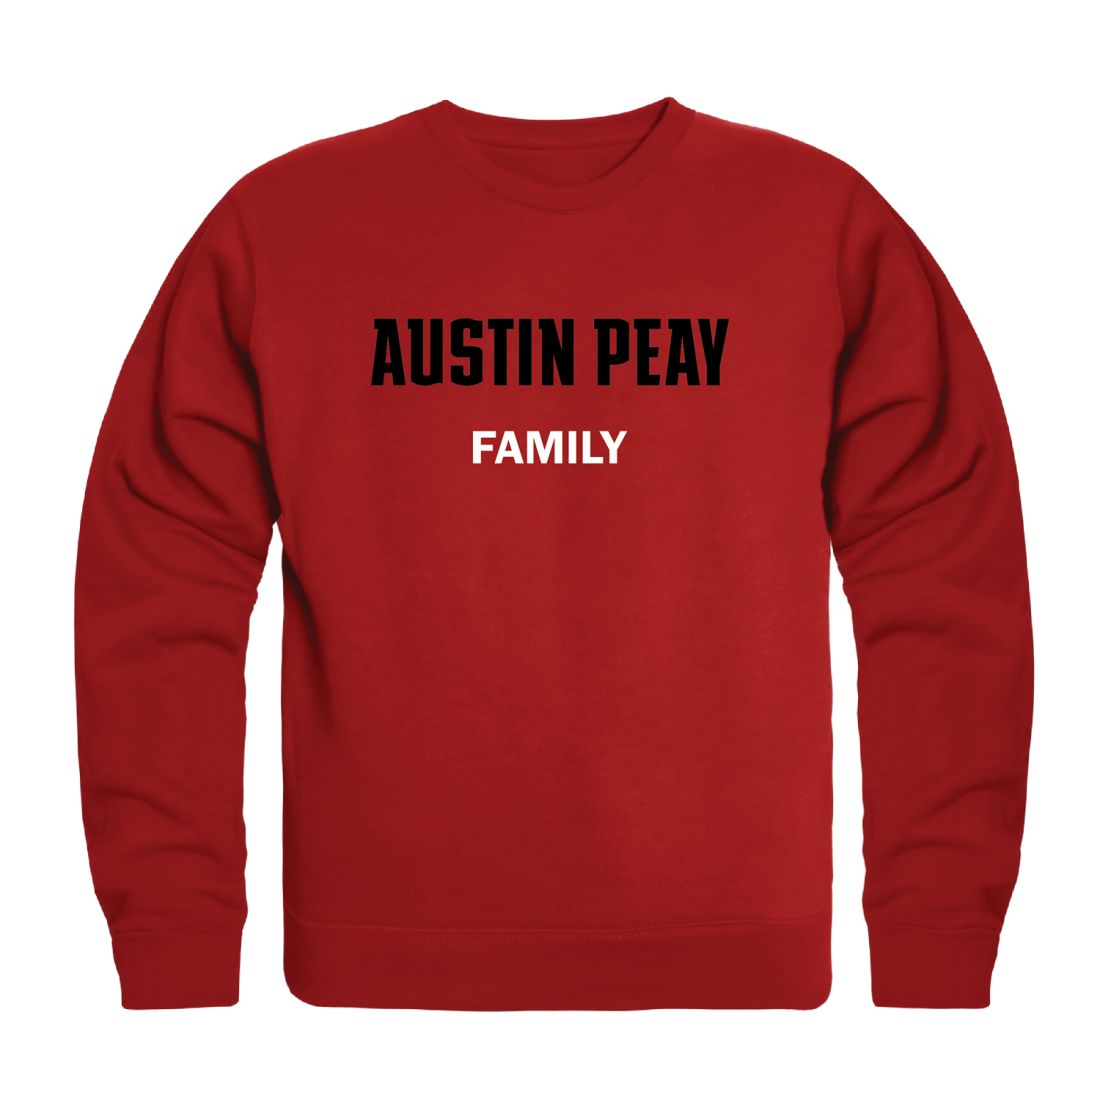 APSU-Austin-Peay-State-University-Governors-Family-Fleece-Crewneck-Pullover-Sweatshirt